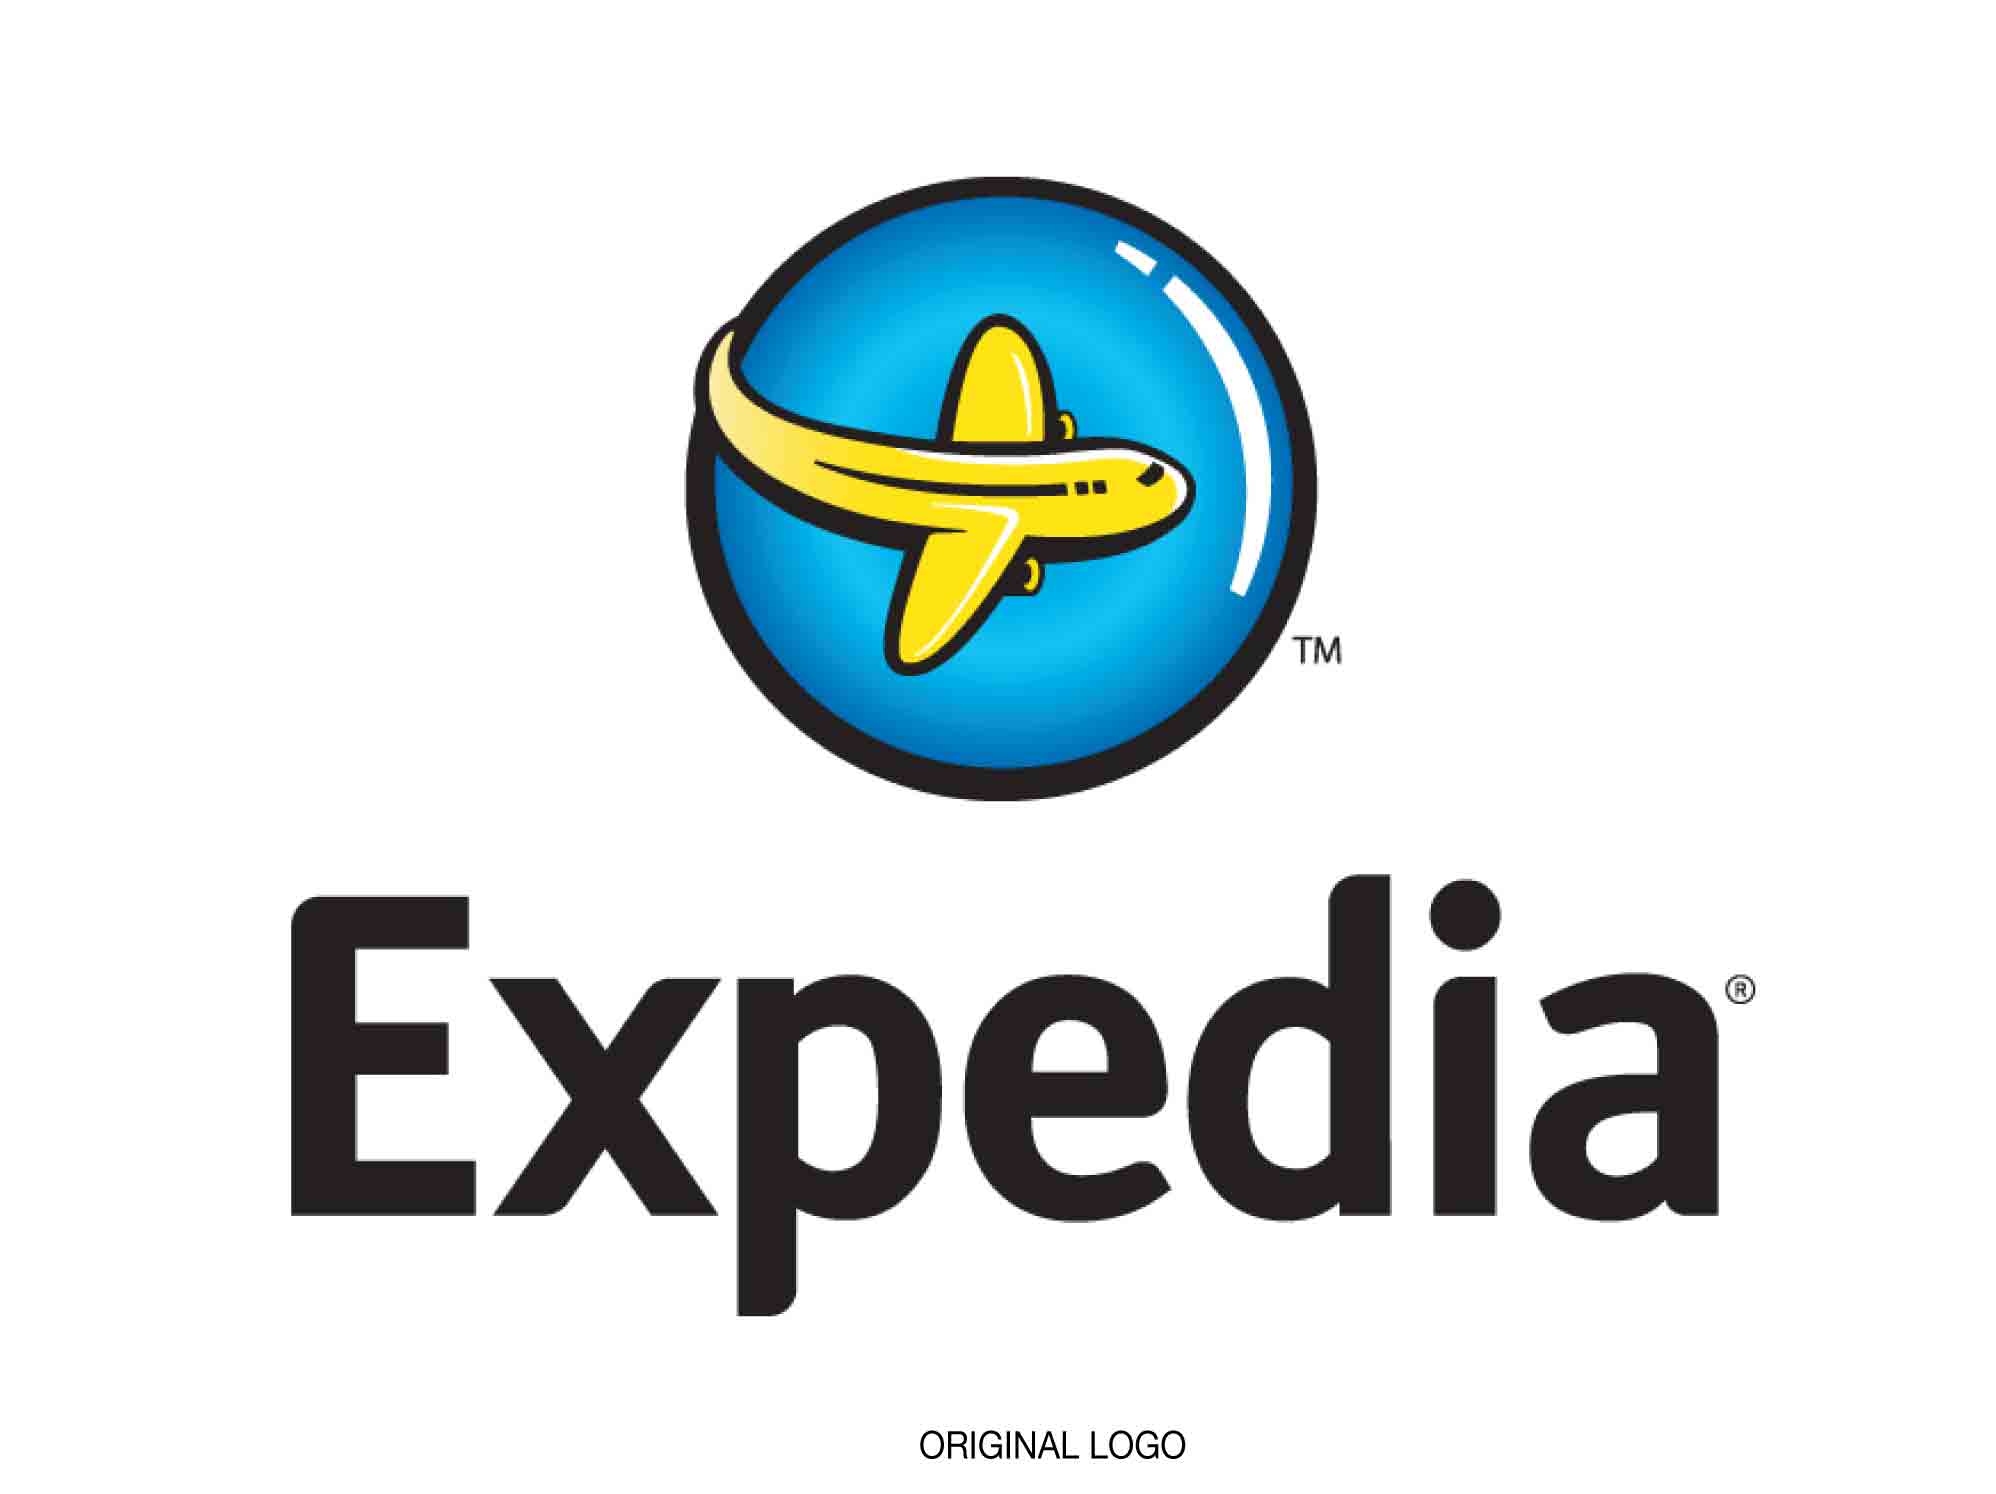 Old a & E Logo - Expedia Repositions | Articles | LogoLounge